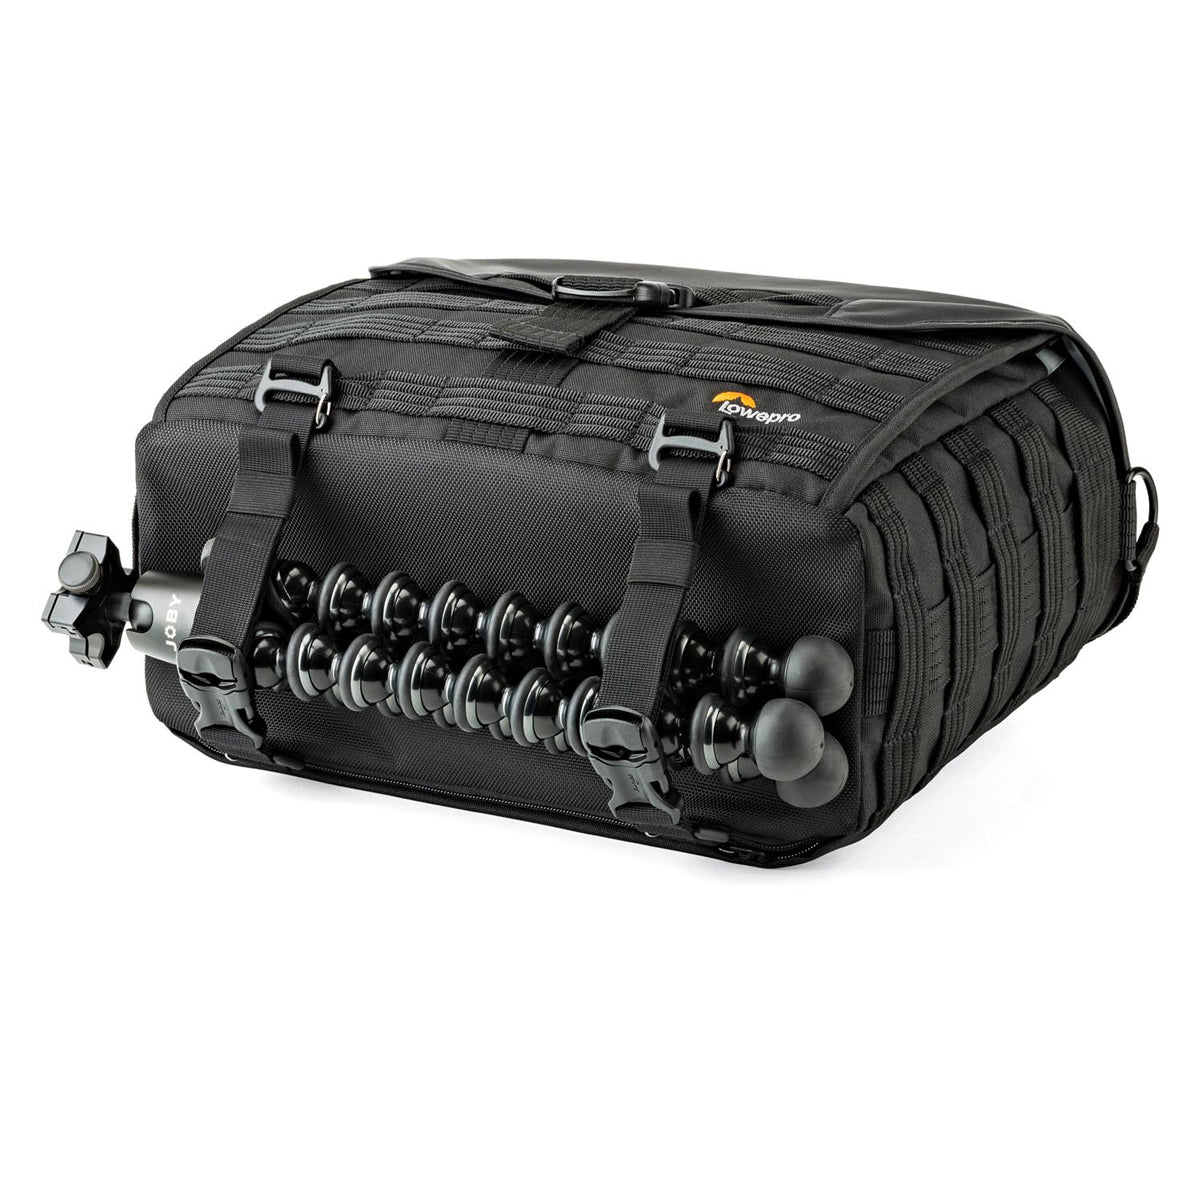 Lowepro ProTactic SH 200 AW Camera Shoulder Bag (Black)